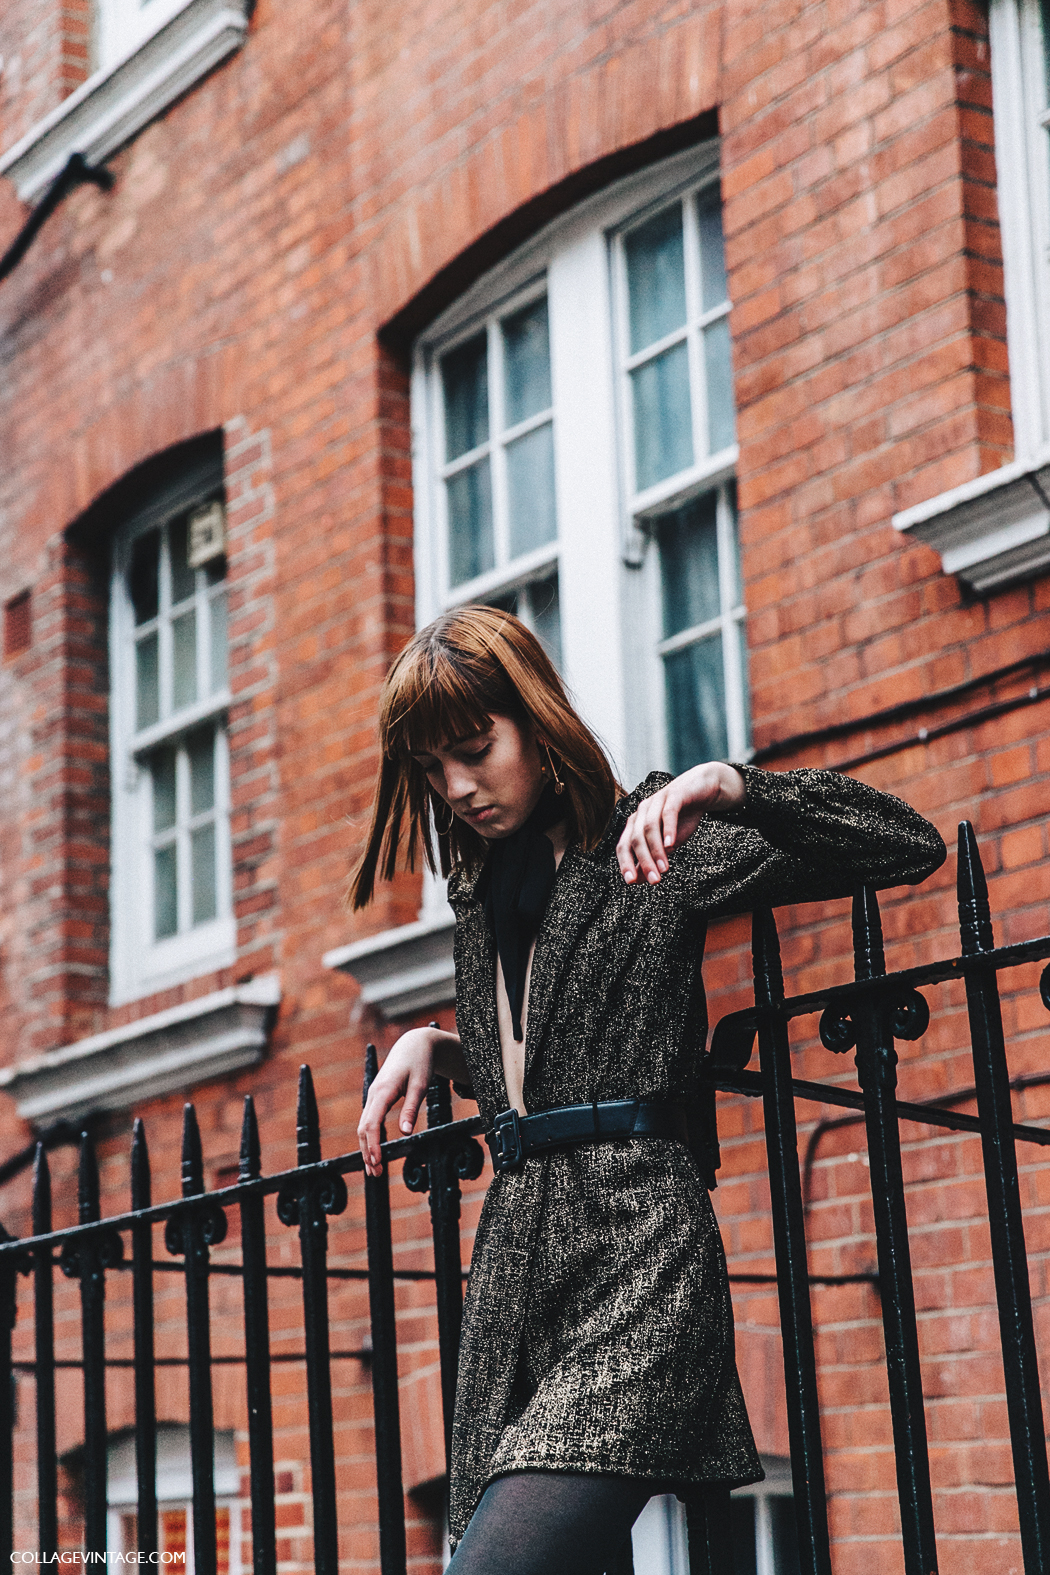 LFW-London_Fashion_Week_Fall_16-Street_Style-Collage_Vintage-Trousers-Louis_Vuitton_Bag-Biker_Jacket-Teddy_Quinlivan-3